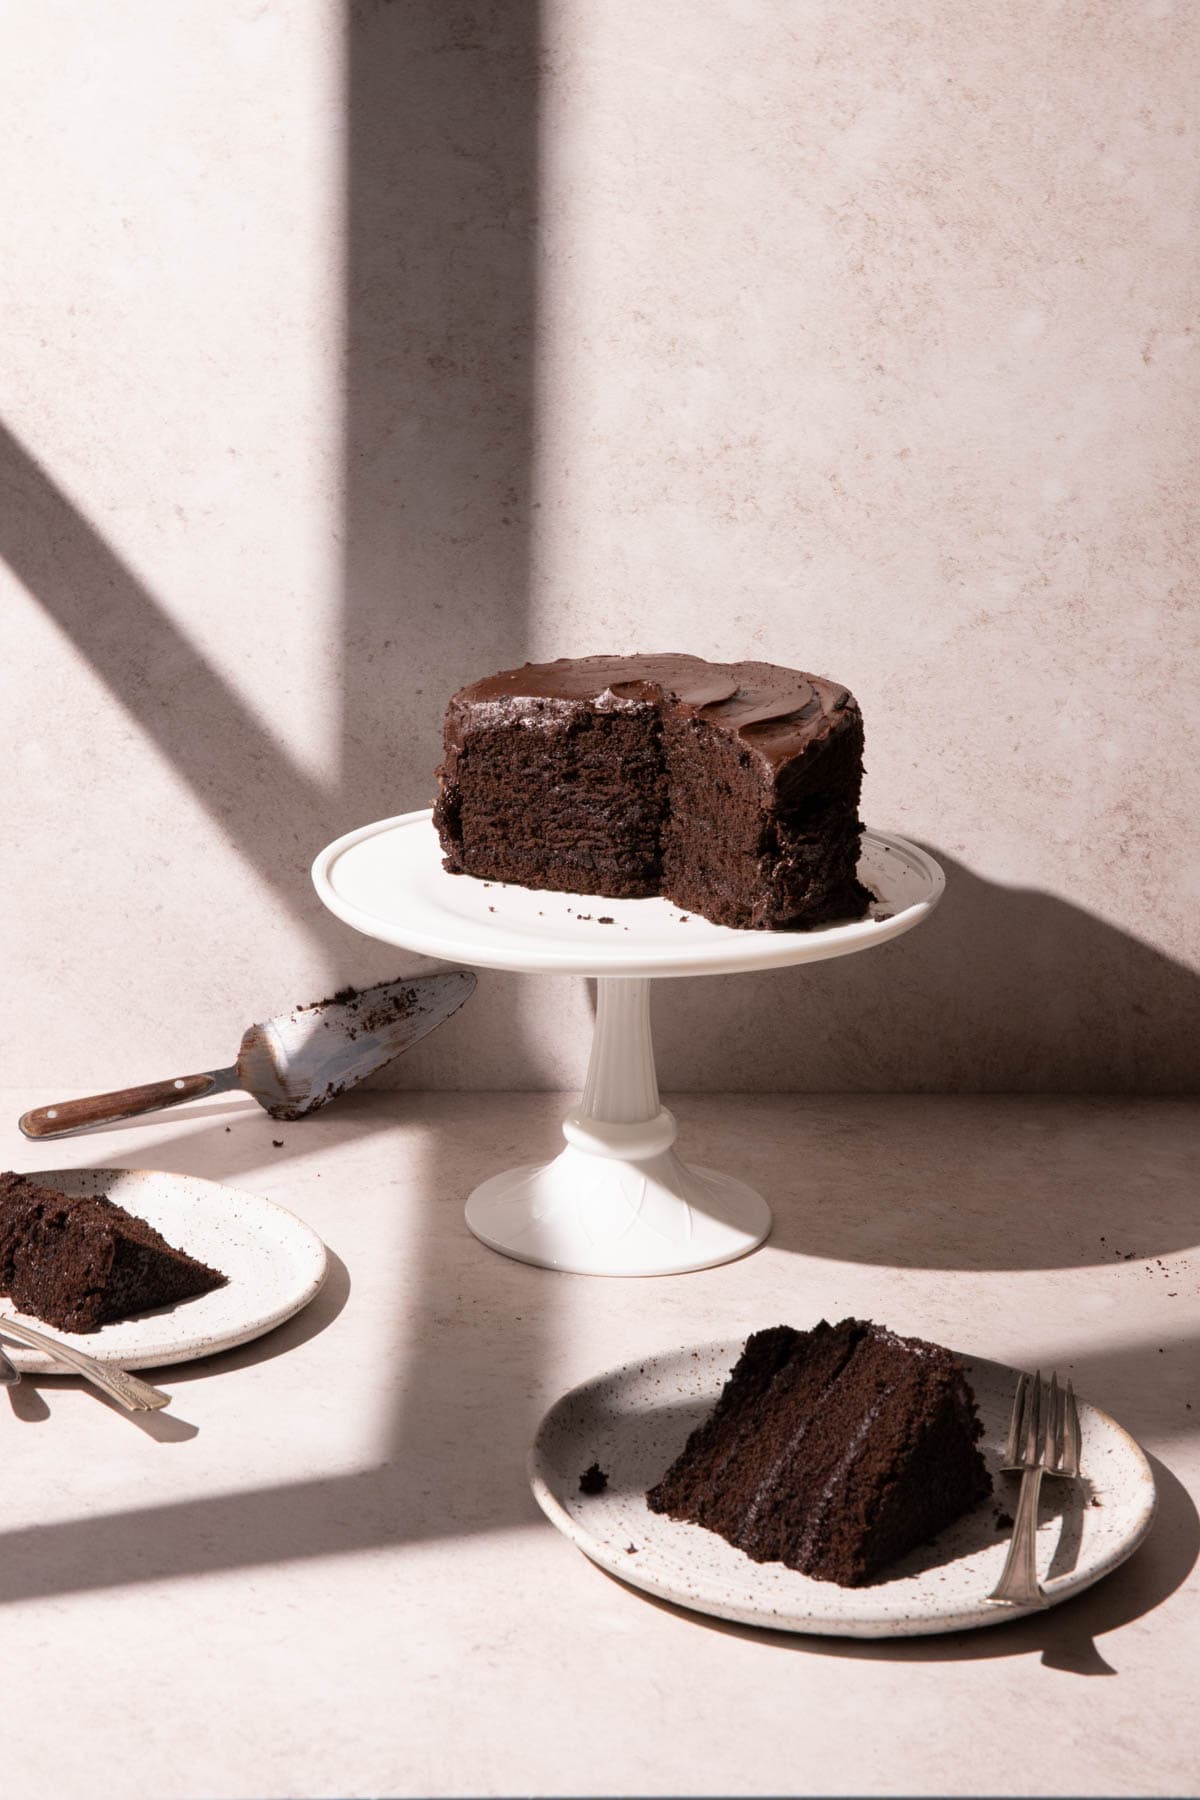 A chocolate cake on a cake stand with window shadows